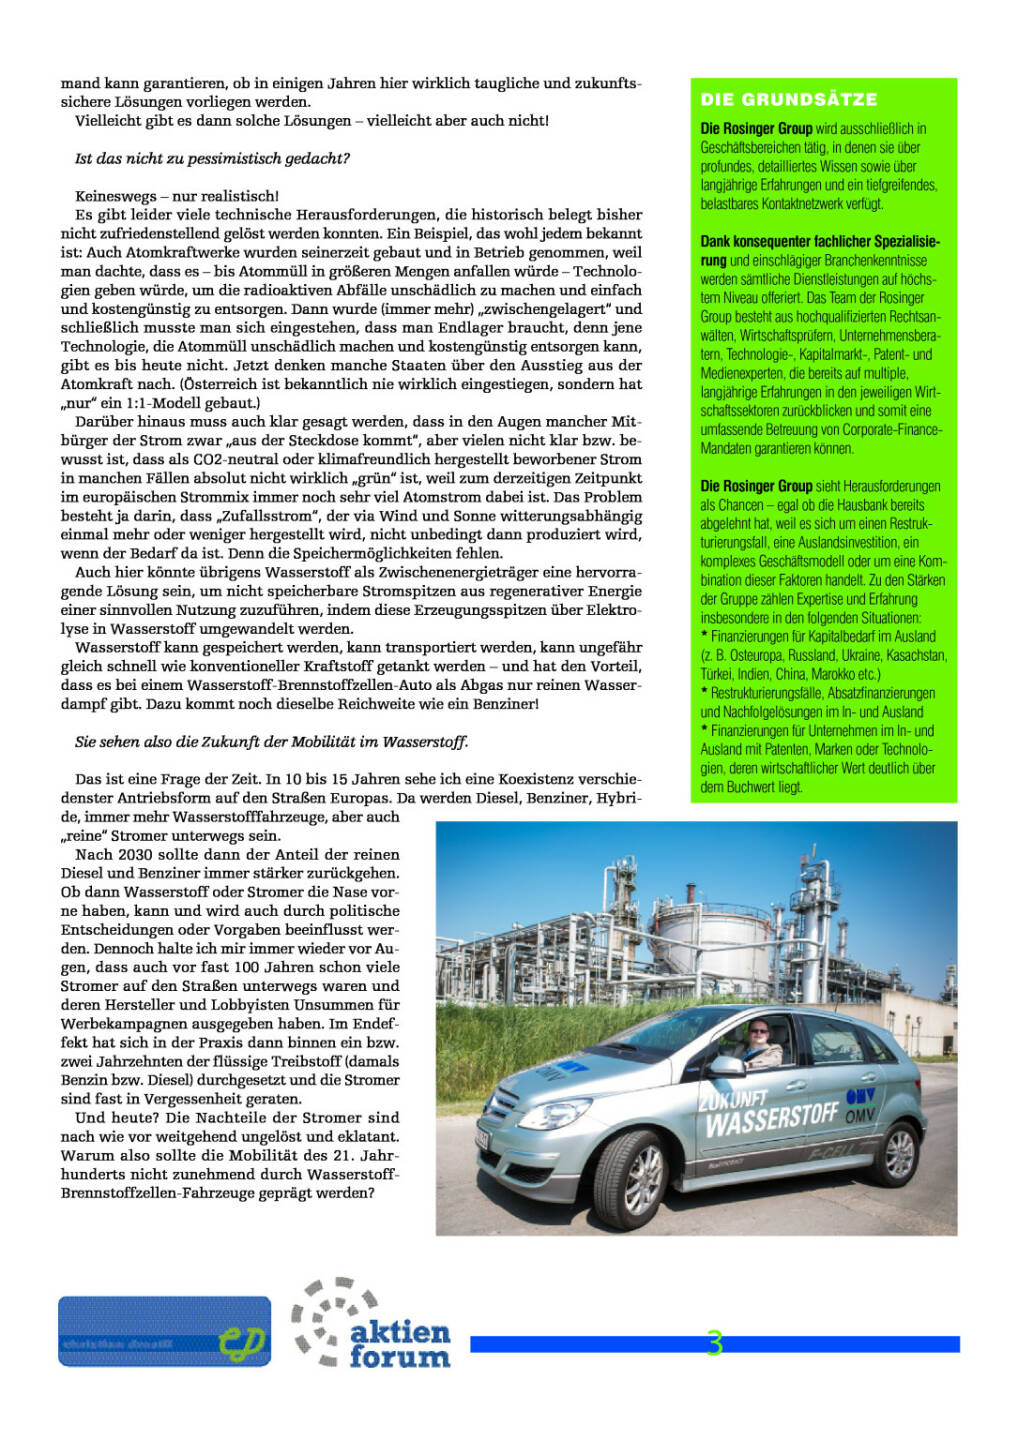 Rosinger Group zu Wasserstoff, die Zukunft der Mobilität, Seite 3/12, komplettes Dokument unter http://boerse-social.com/static/uploads/file_166_rosinger_group_wasserstoff.pdf